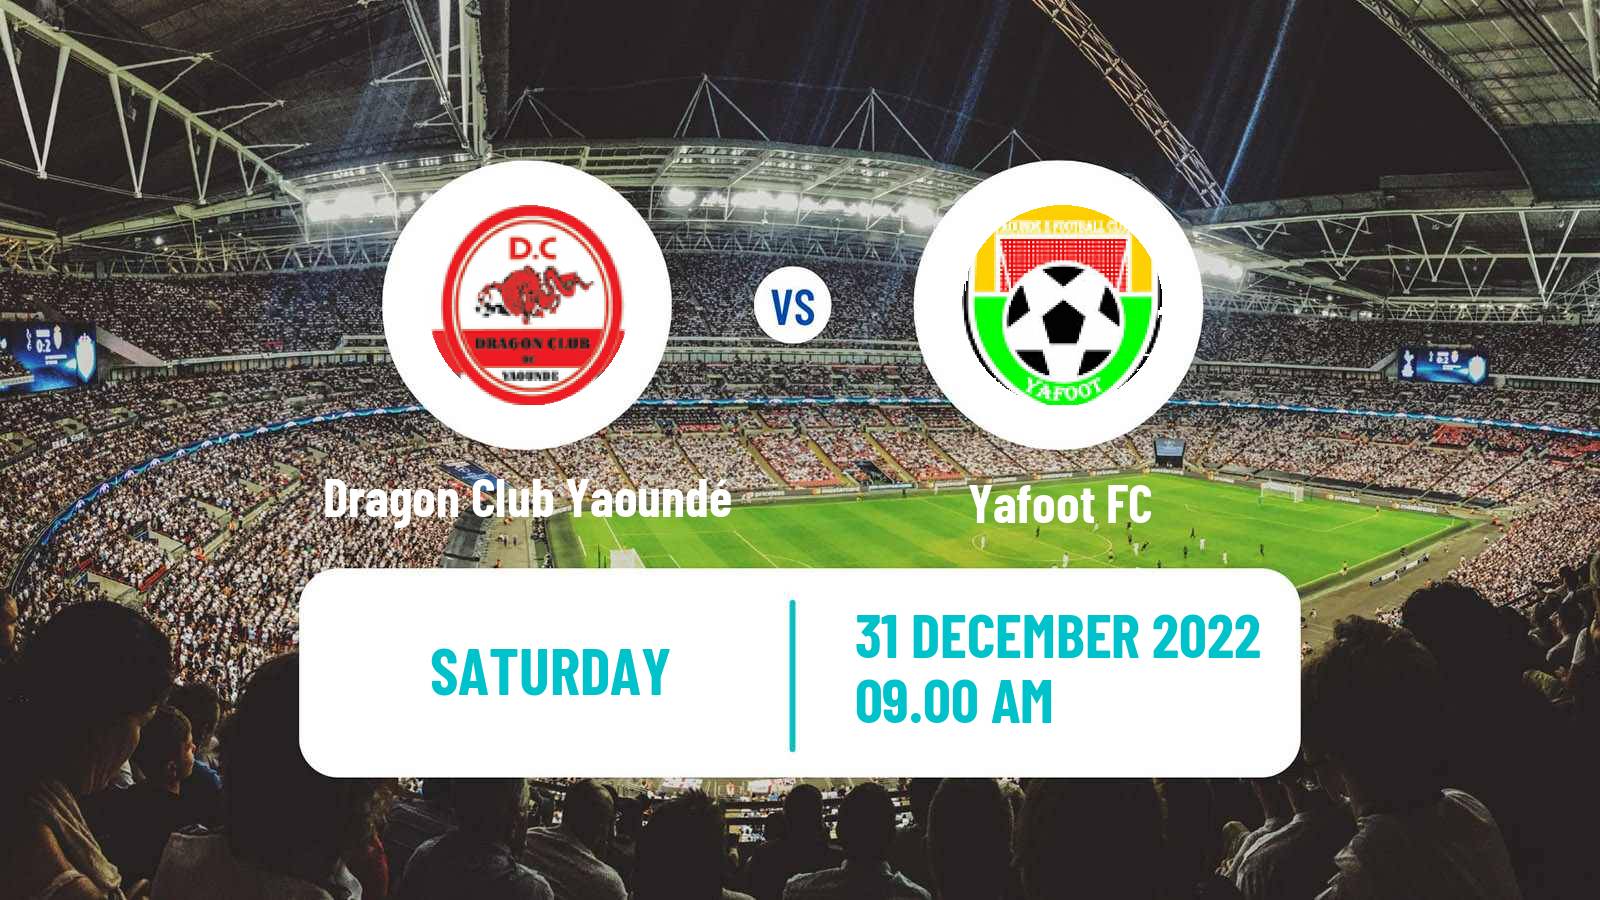 Soccer Cameroon Elite One Dragon Club Yaoundé - Yafoot